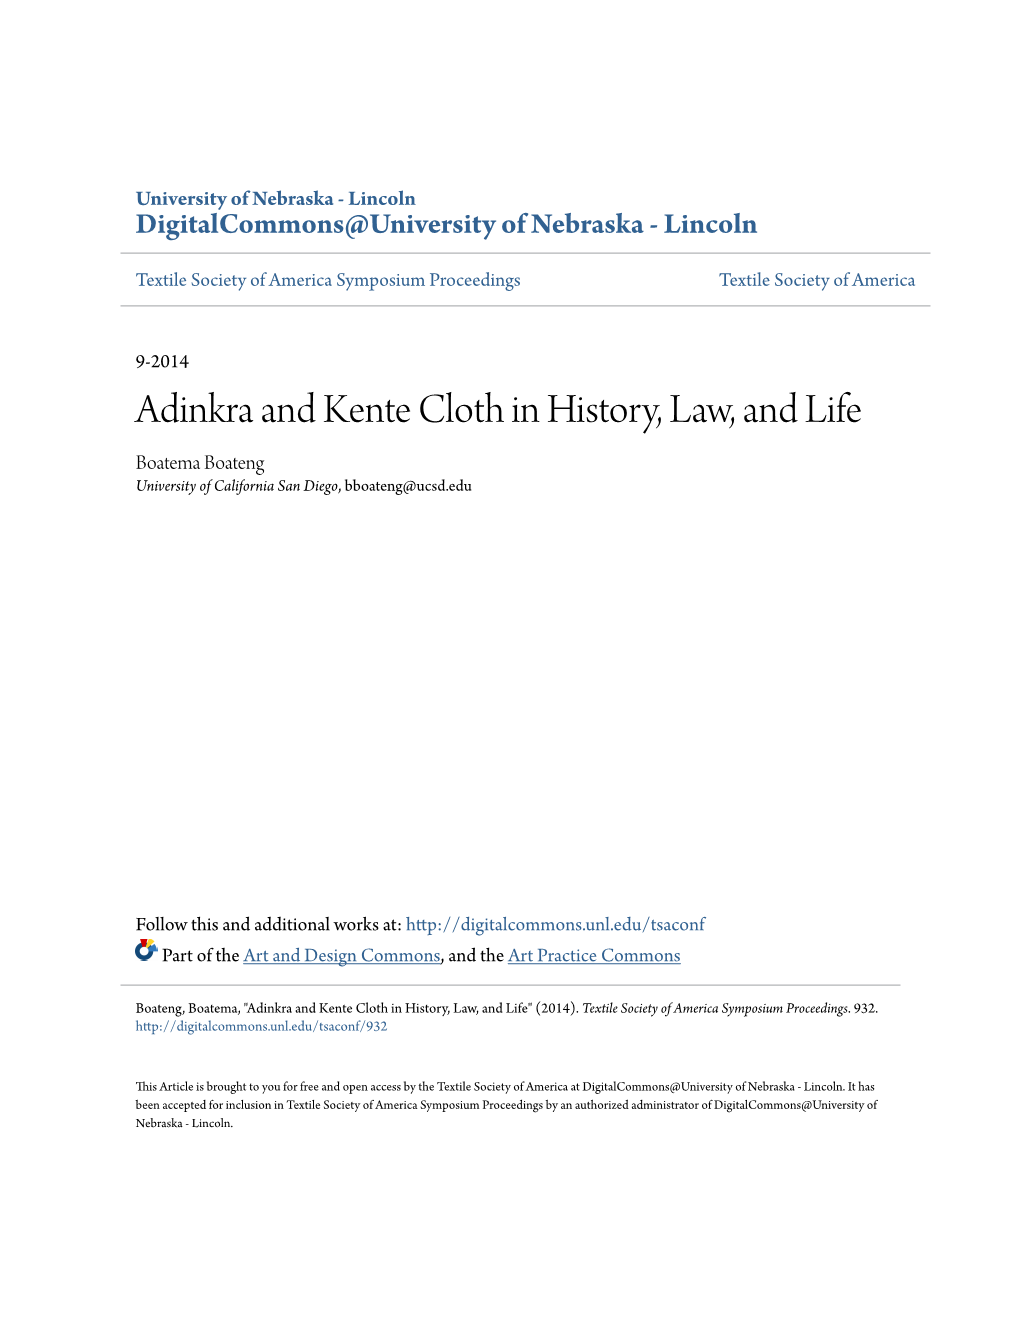 Adinkra and Kente Cloth in History, Law, and Life Boatema Boateng University of California San Diego, Bboateng@Ucsd.Edu